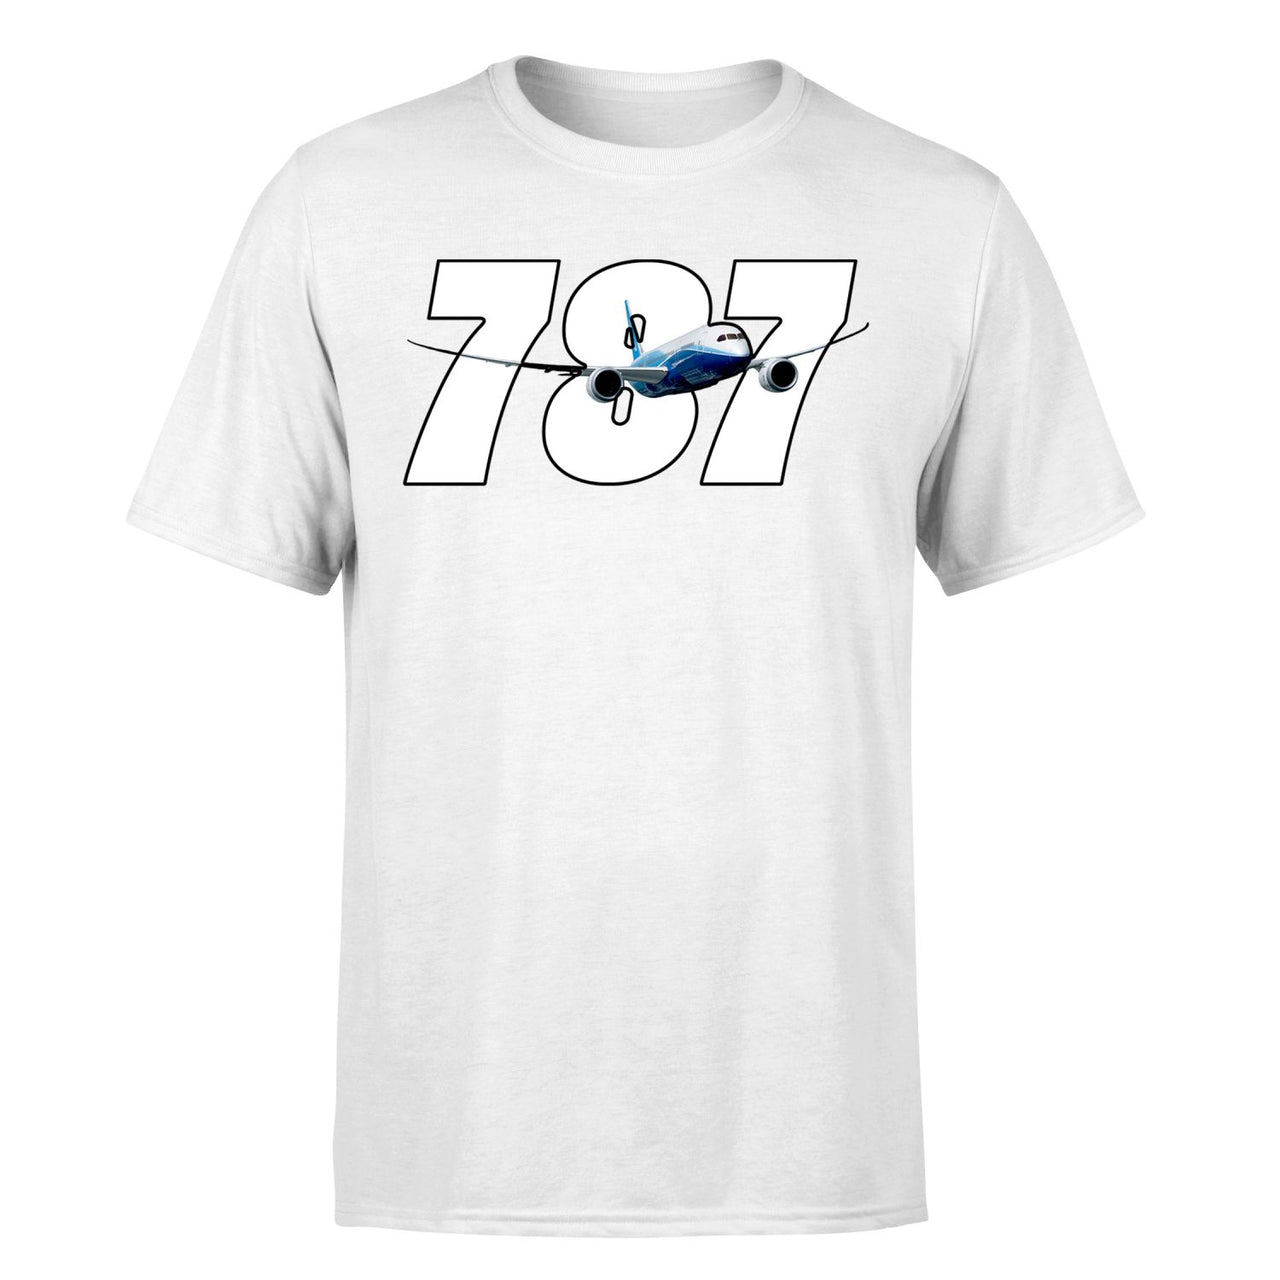 Super Boeing 787 Designed T-Shirts